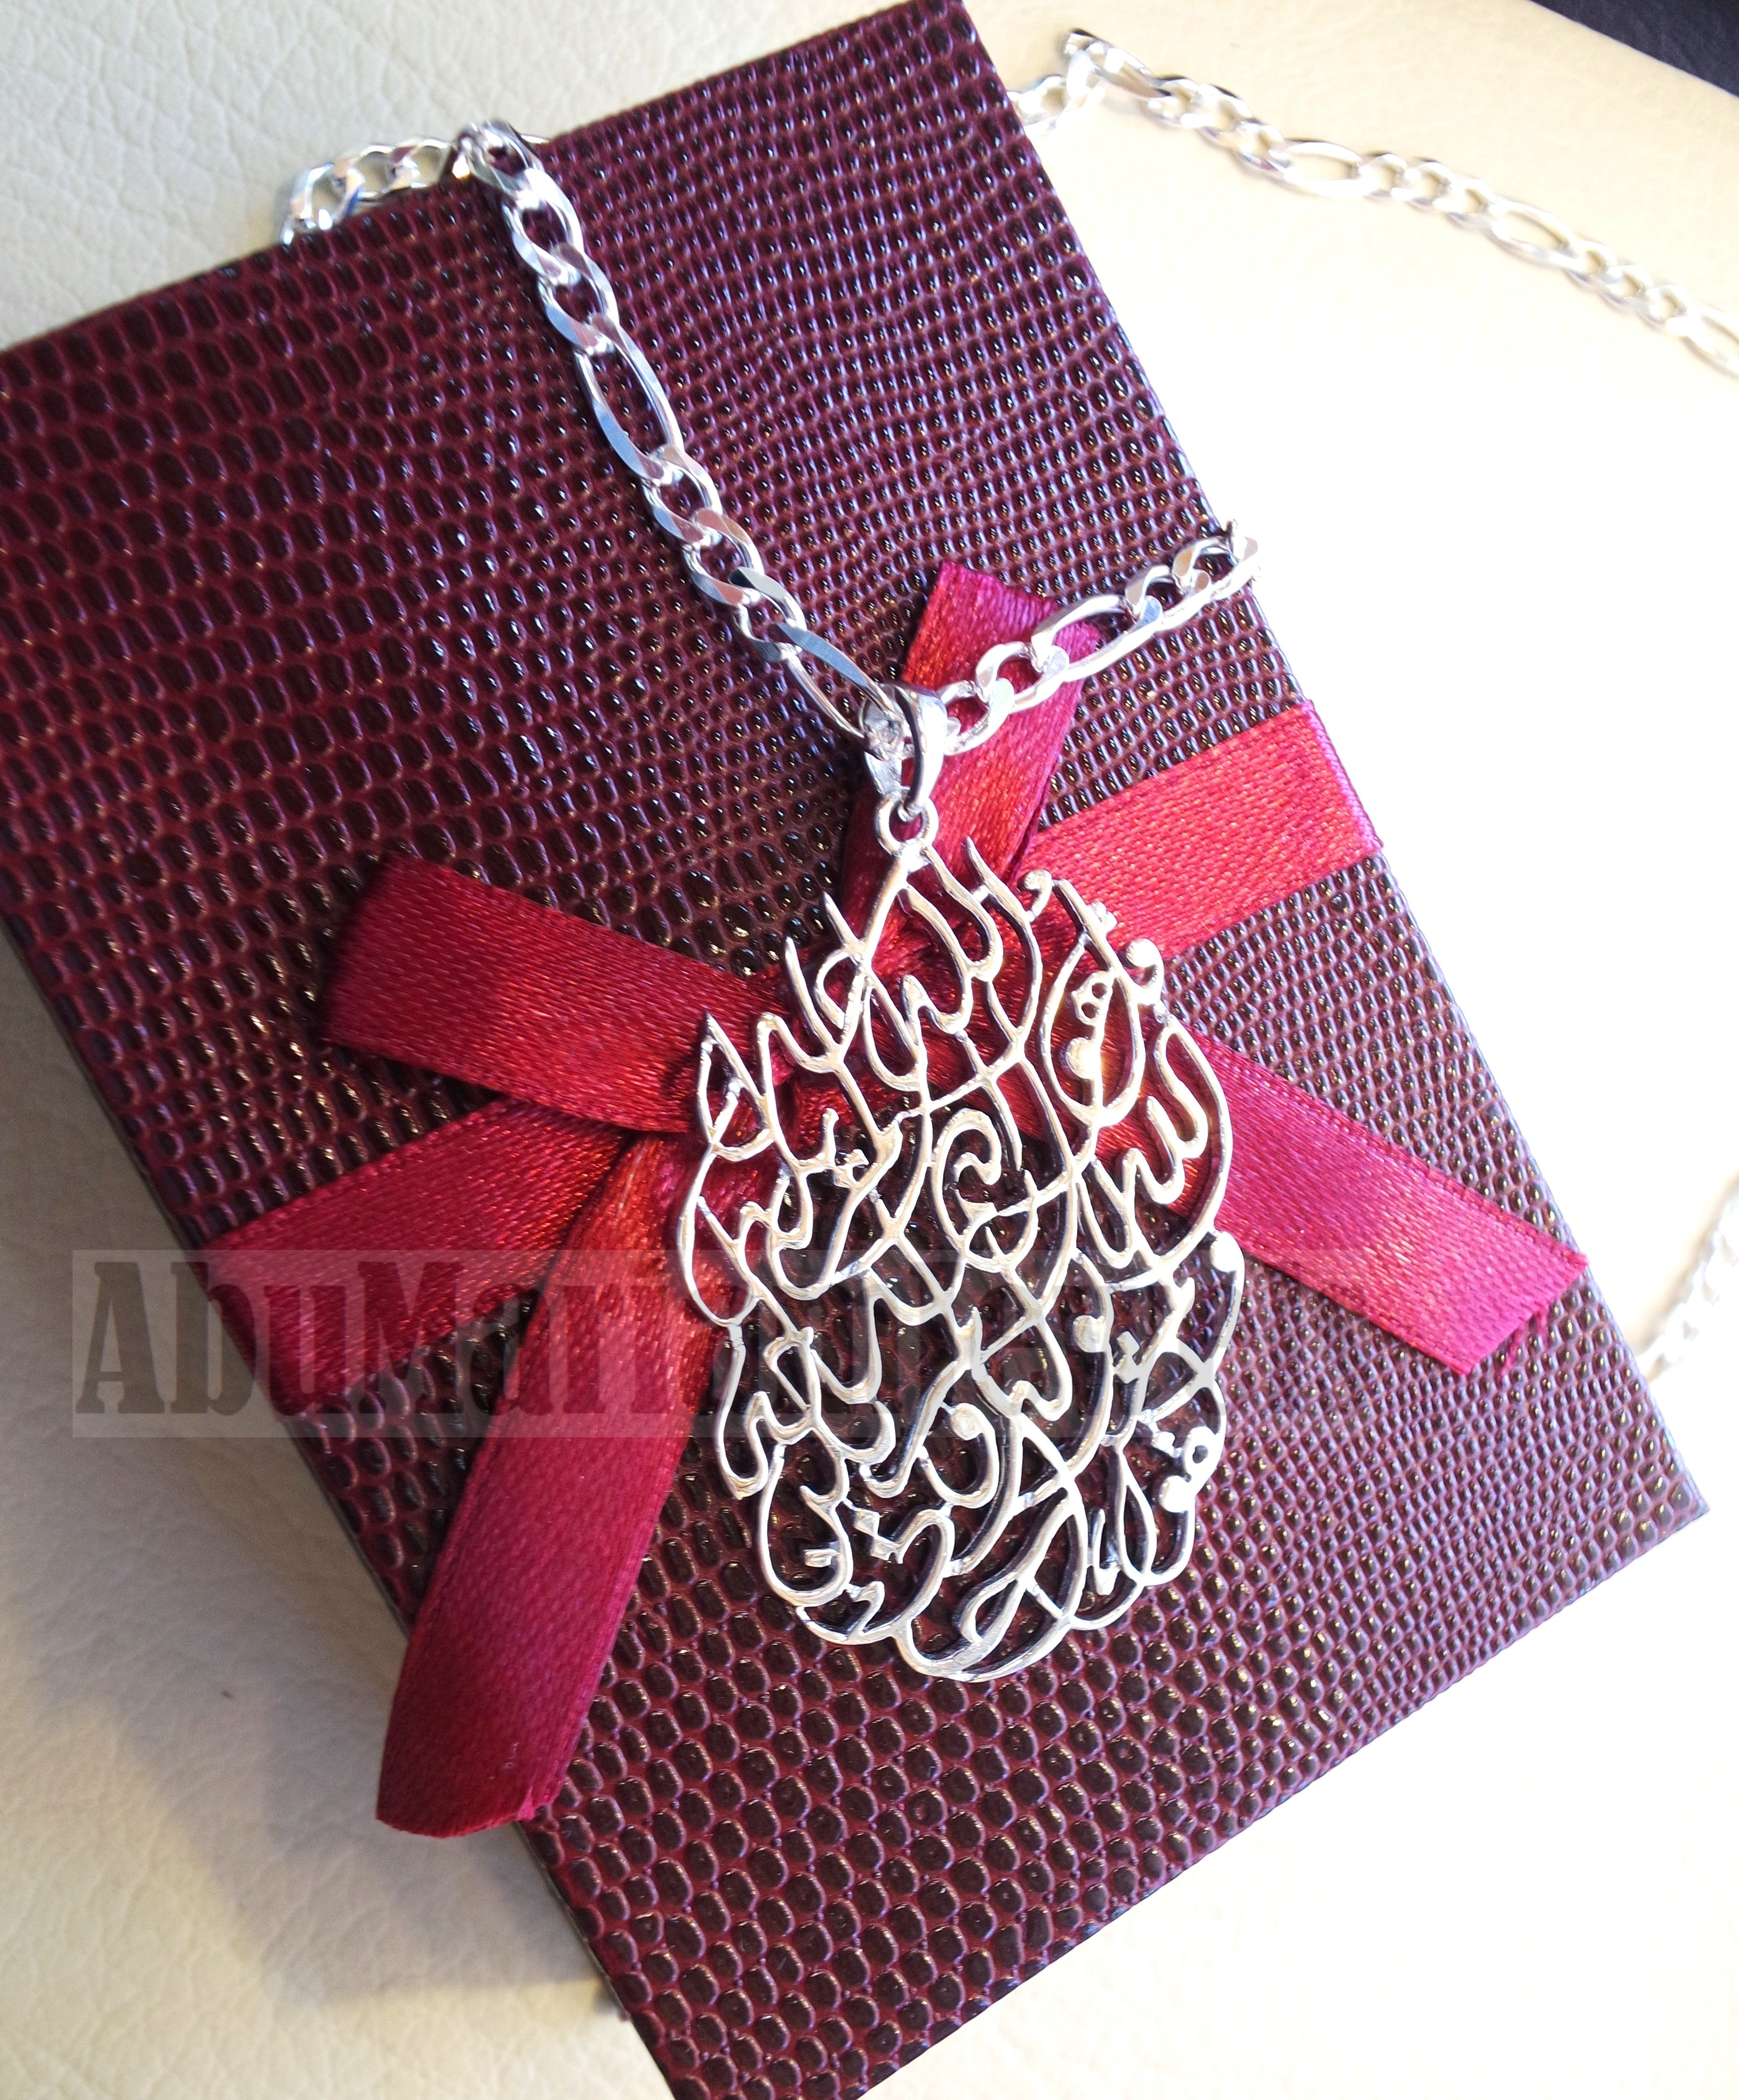 Kol hoa Allah Ahad quraan verses handmade calligraphy sterling silver 925 pendant with thick chain islamic arabic اسلام الله سورة الاخلاص كاملة